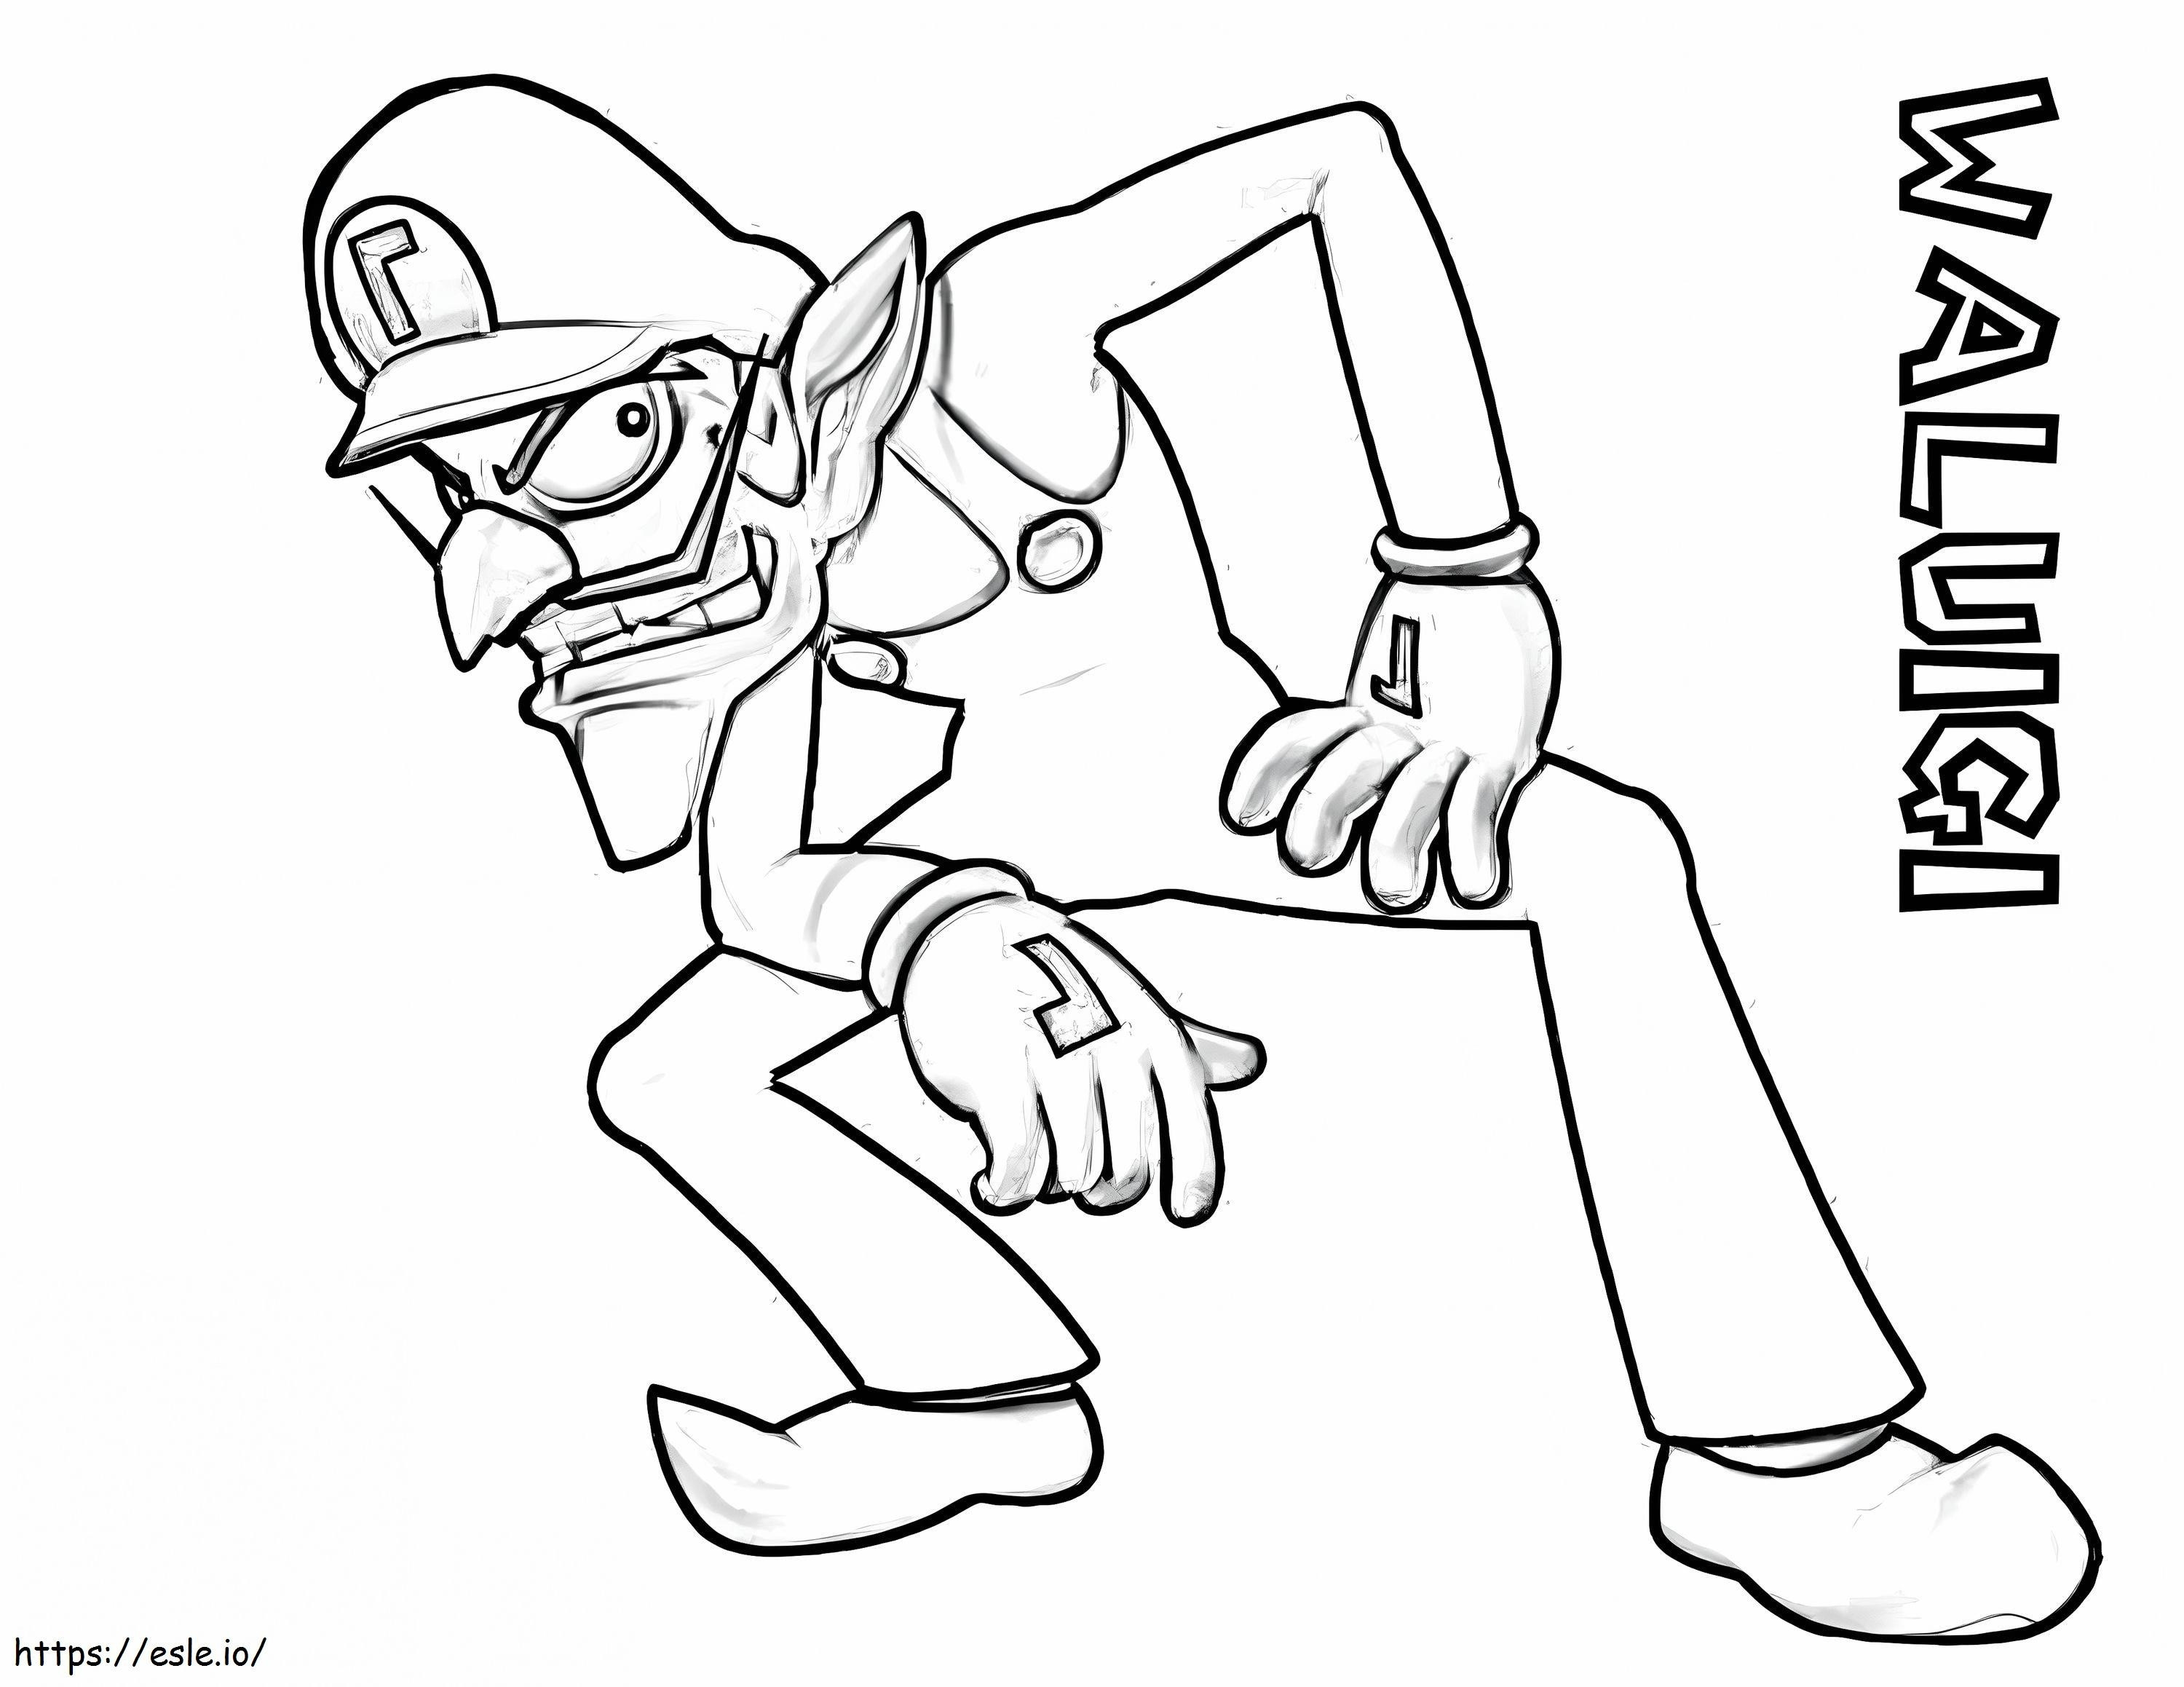 Coloriage Waluigi de Super Mario 1 à imprimer dessin